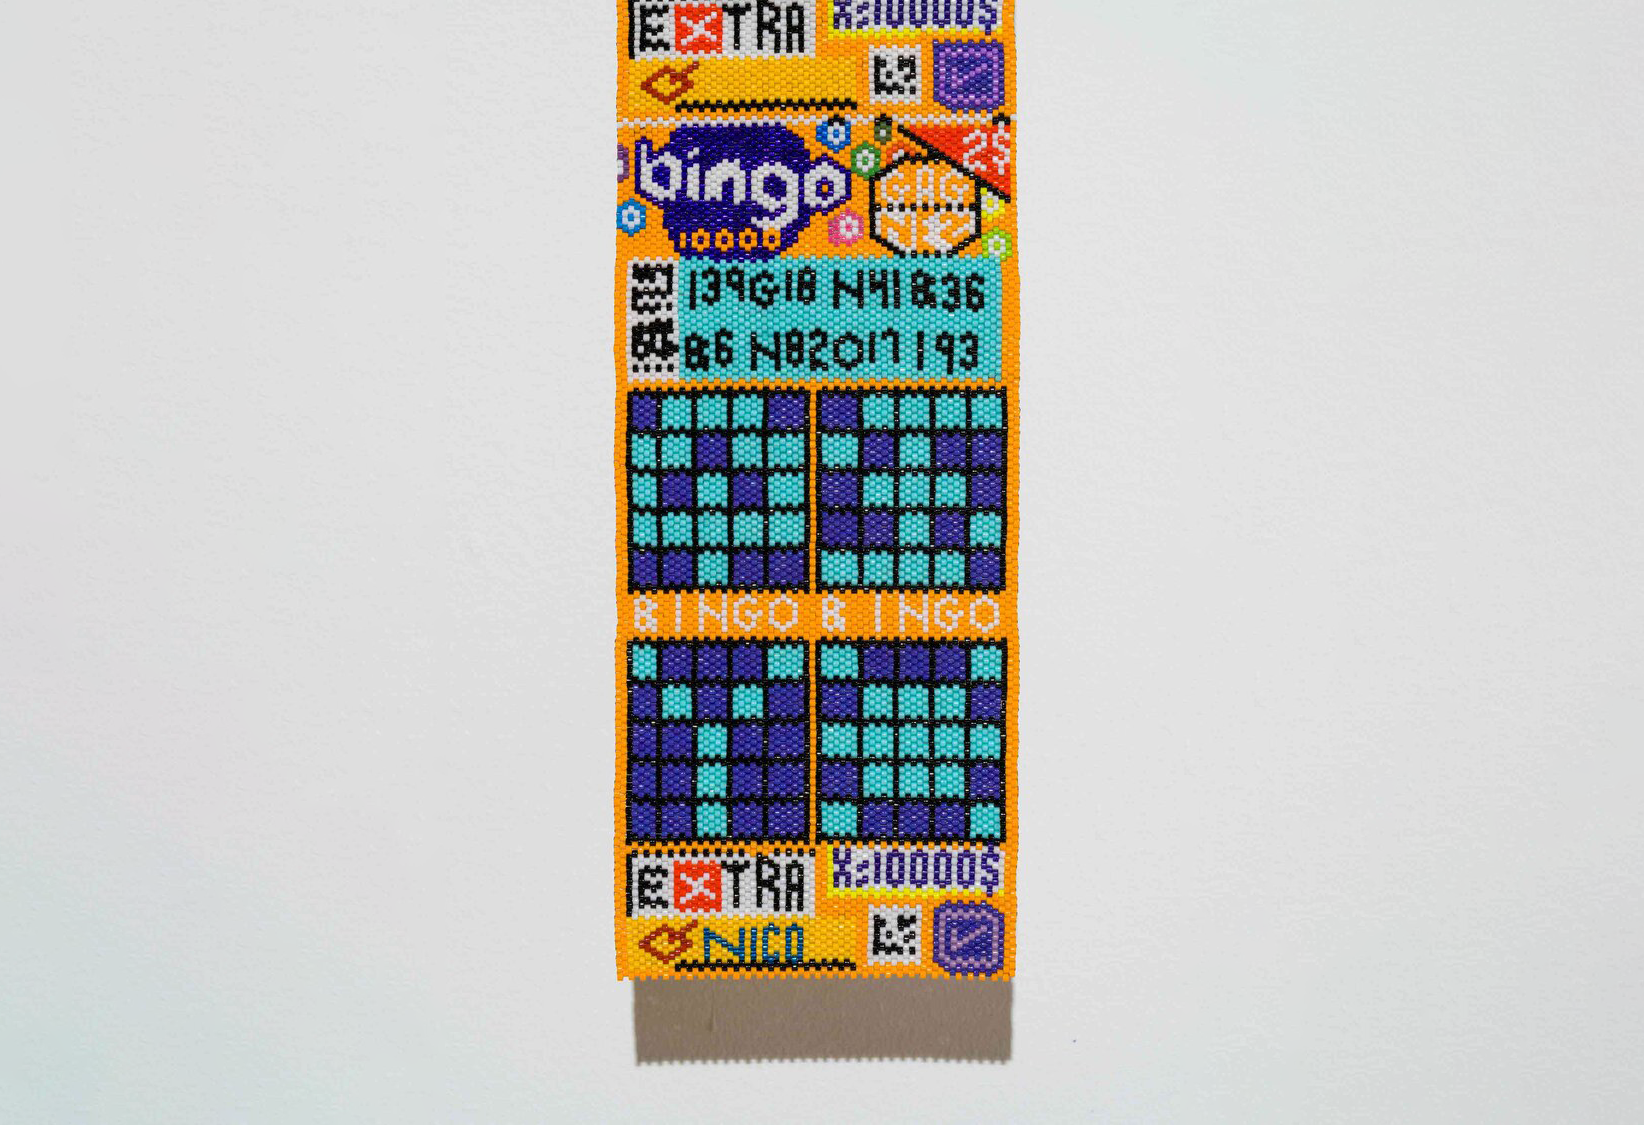 Bingo Card made from beads